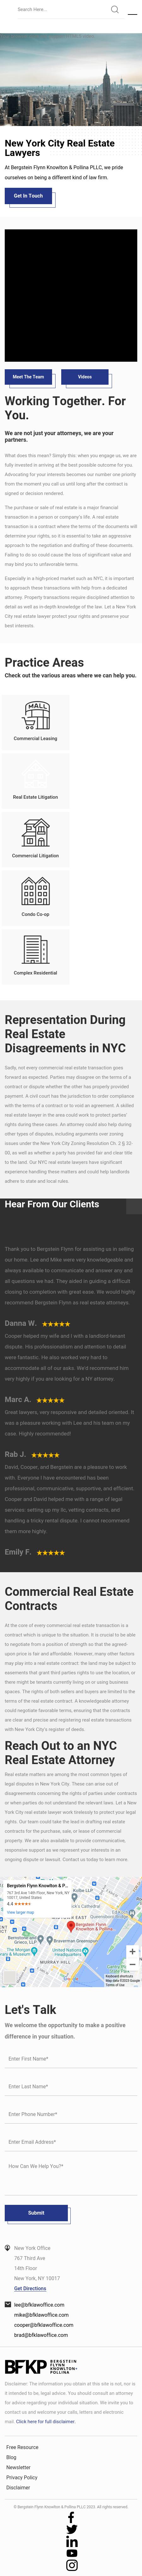 Bergstein Flynn & Knowlton PLLC - New York NY Lawyers